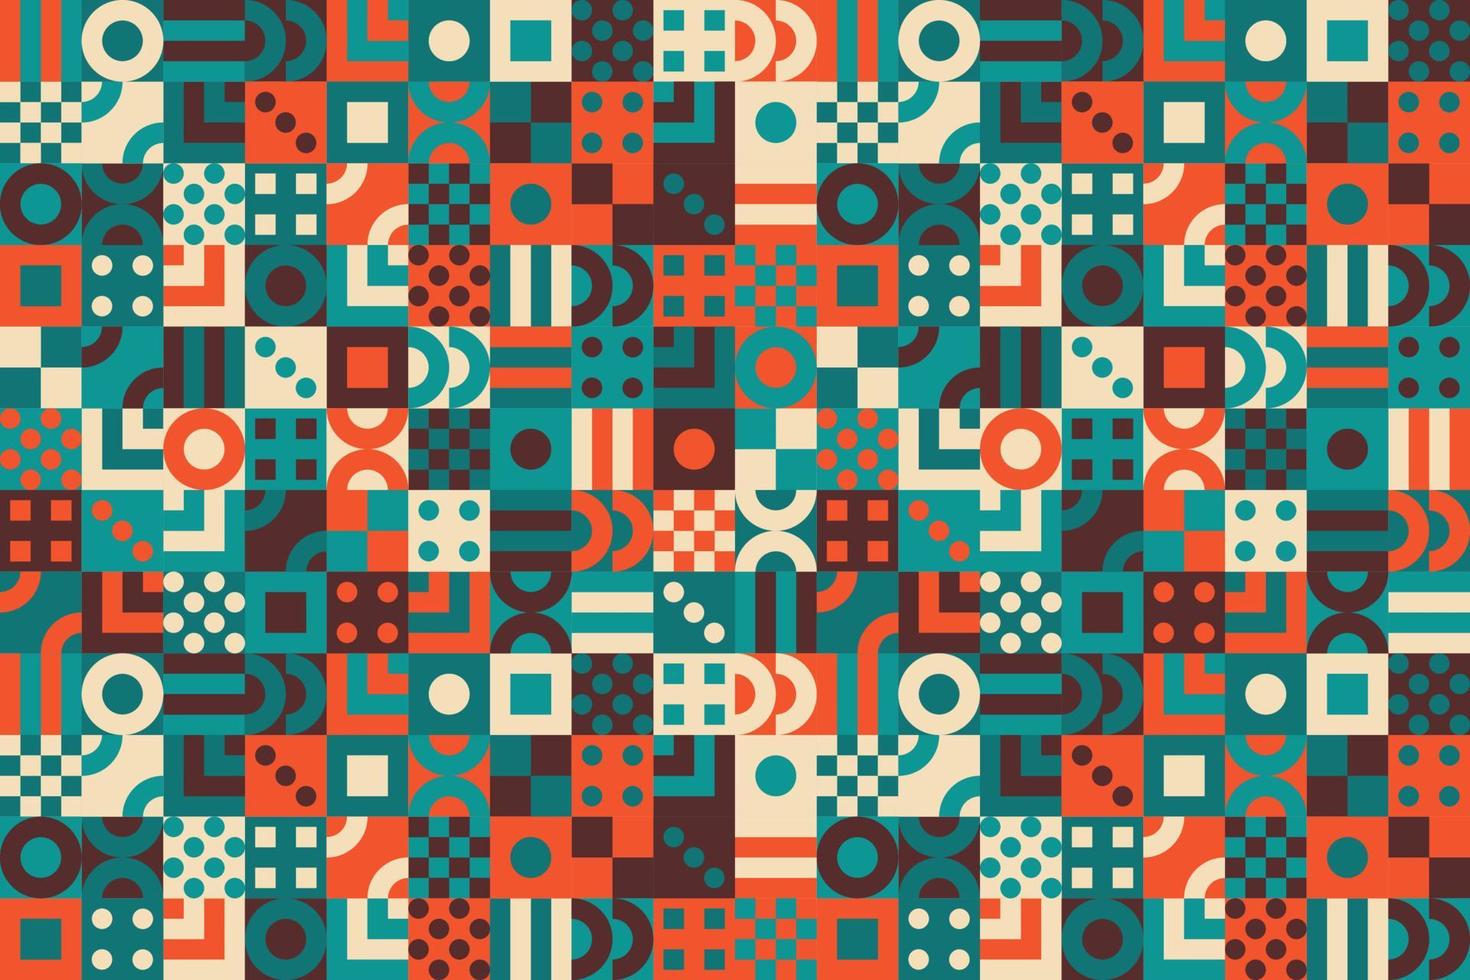 färgrik geometrisk form mosaik- mönster bakgrund vektor